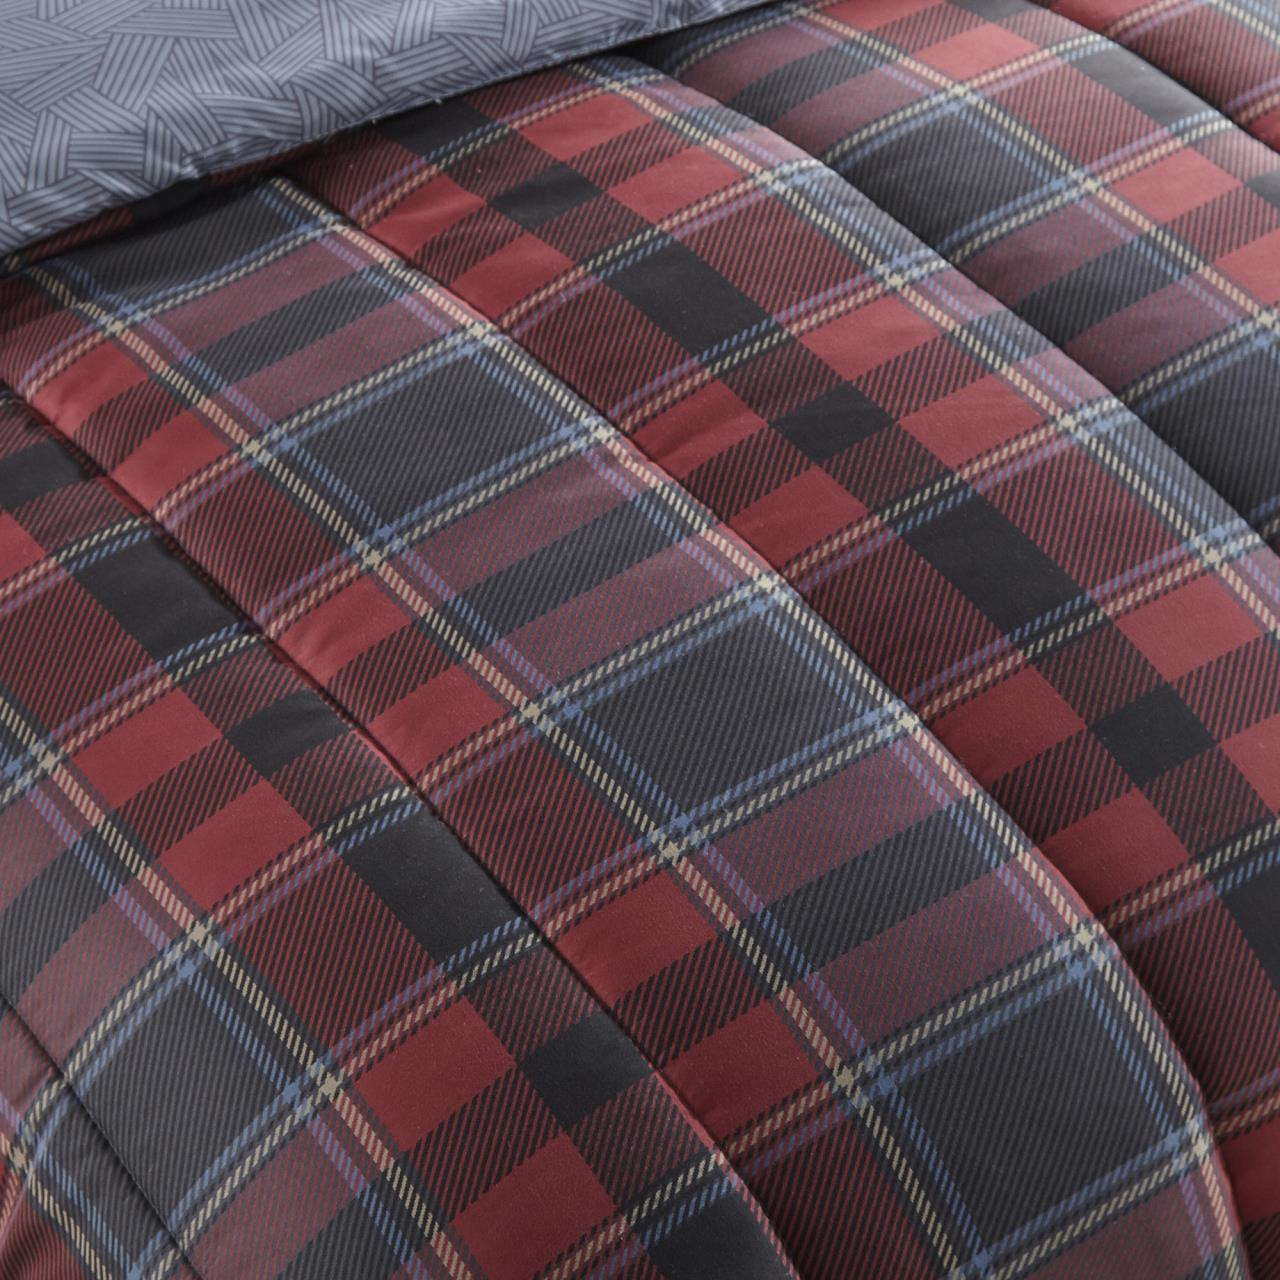 Tartan Comforter Collection -